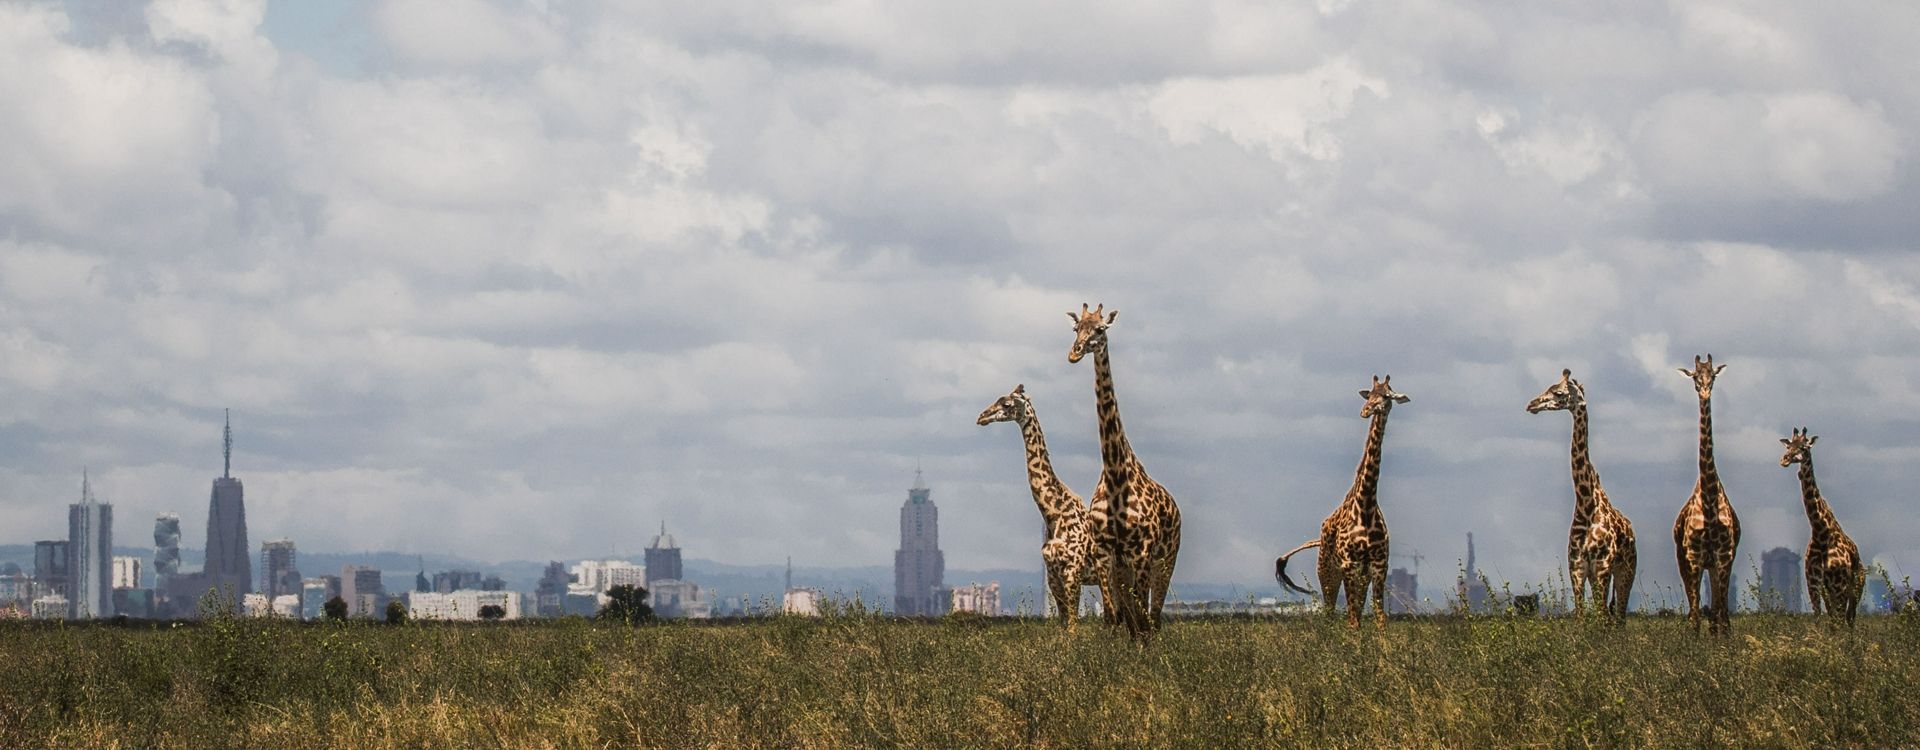 African Travel Inc Kenya -The Emakoko_ Nairobi Skyline decorated by giraffes.jpg